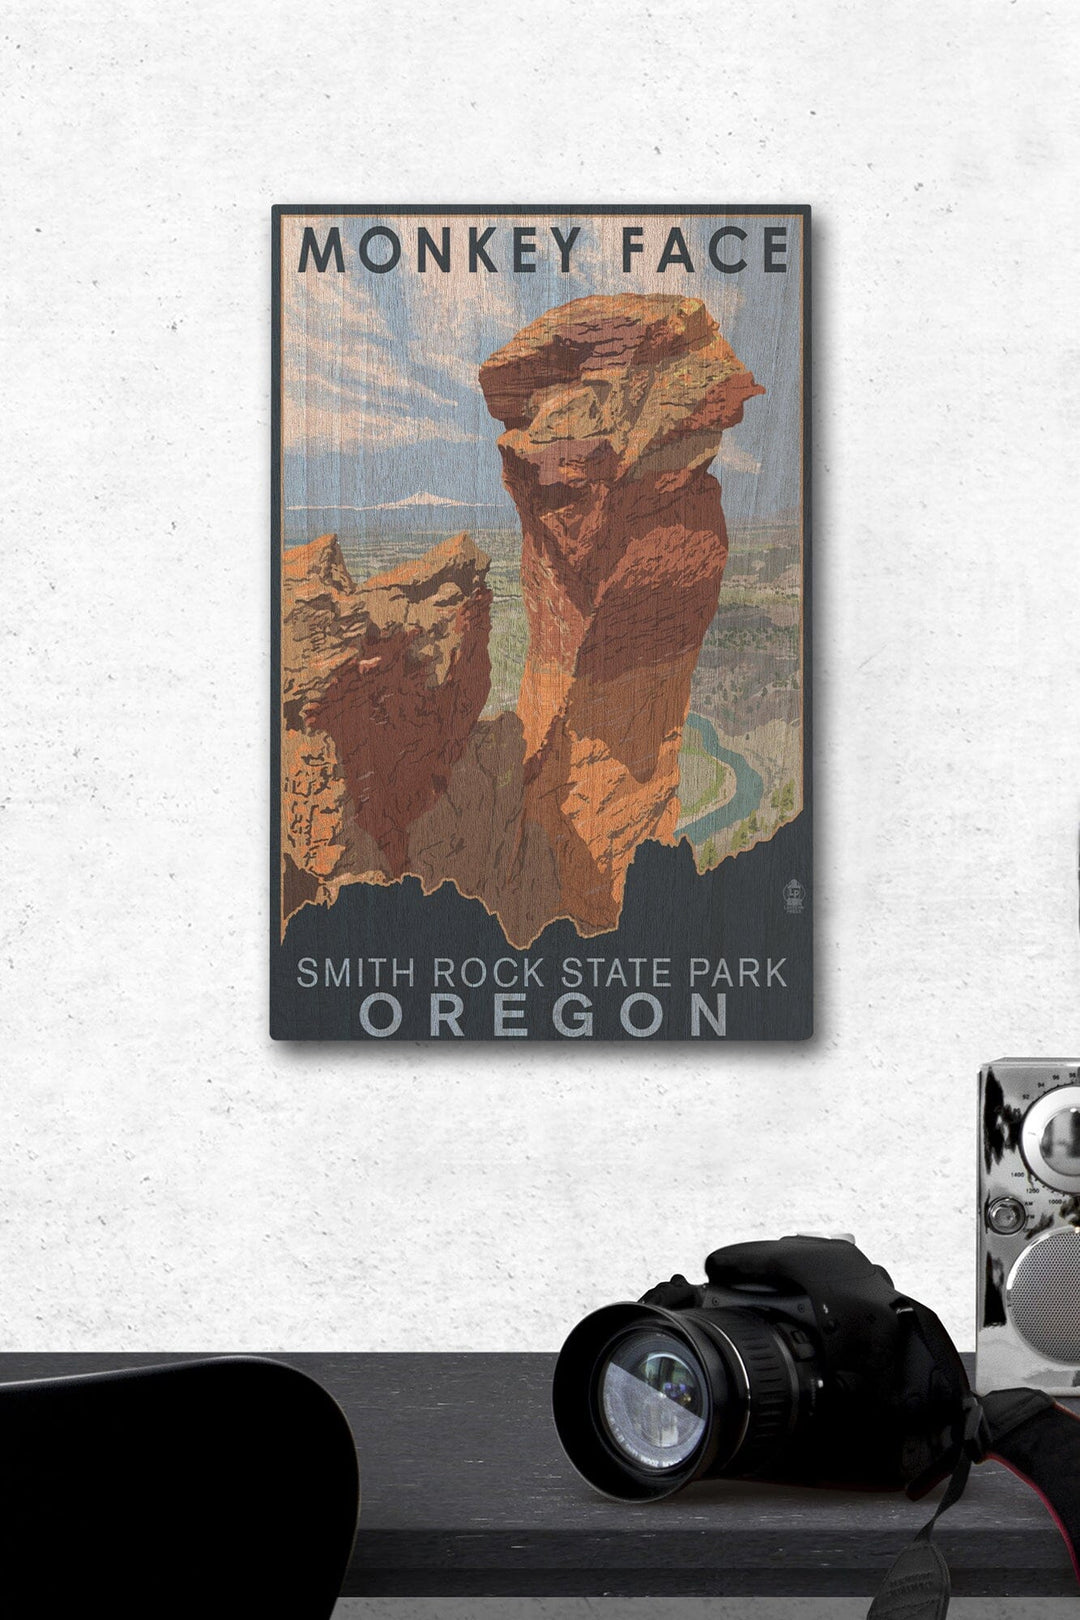 Smith Rock State Park, Oregon, Monkey Face, Lantern Press Artwork, Wood Signs and Postcards Wood Lantern Press 12 x 18 Wood Gallery Print 